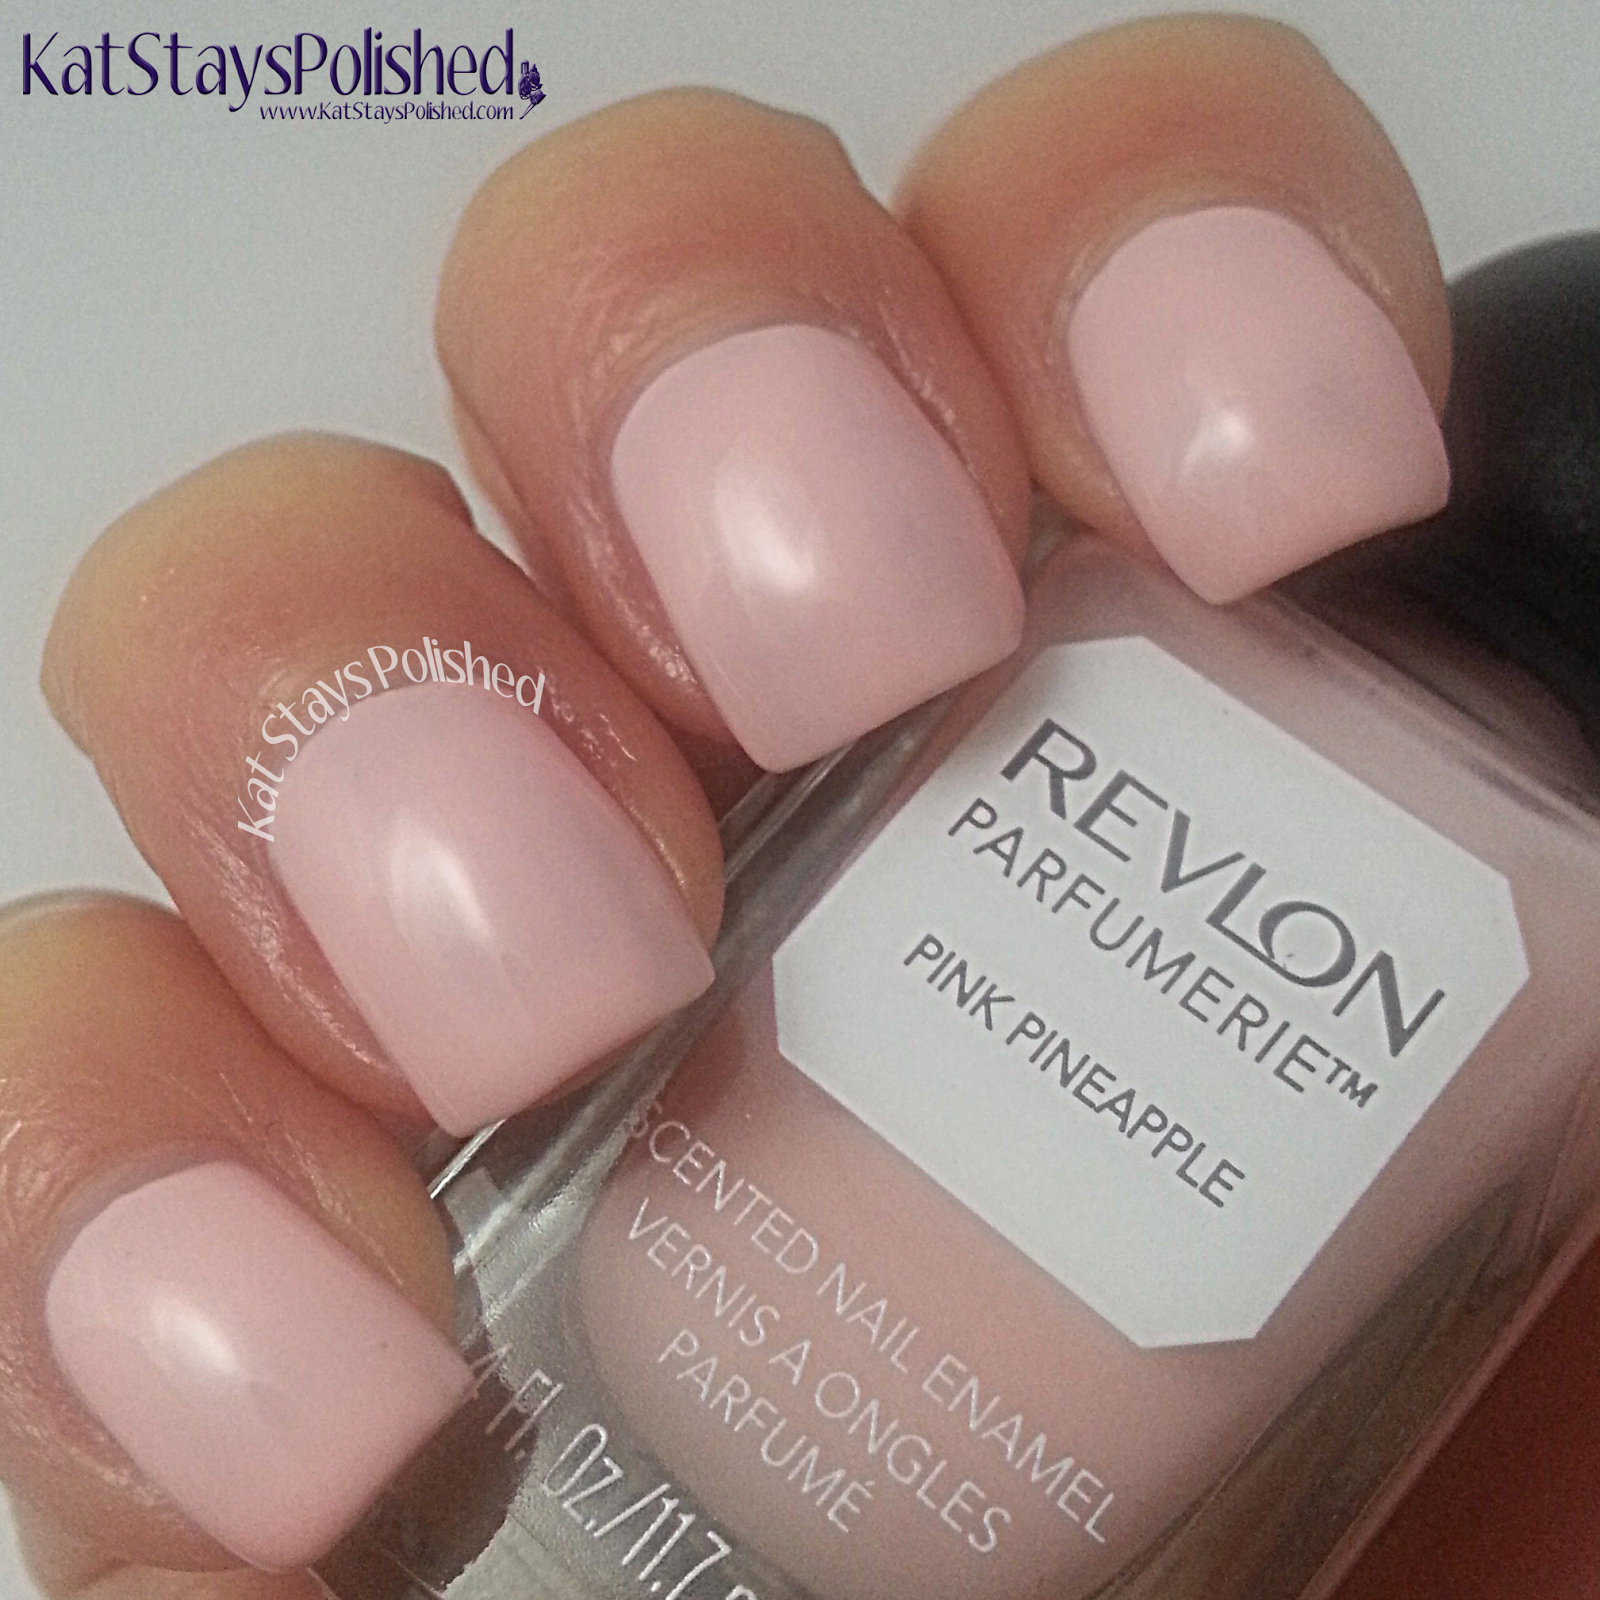 Revlon Parfumerie - Pink Pineapple | Kat Stays Polished